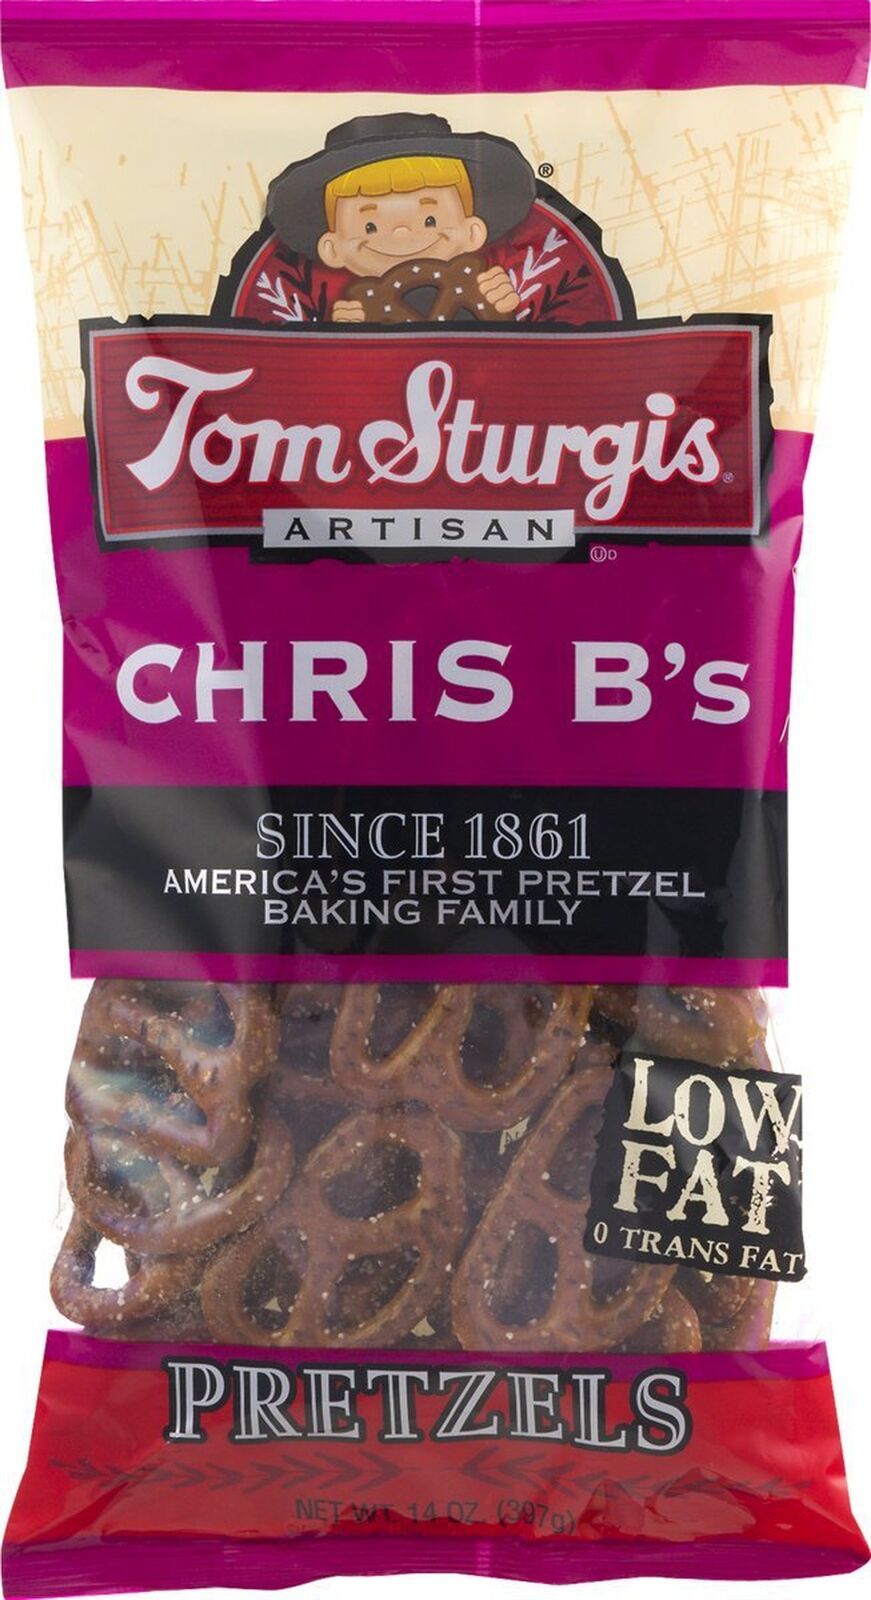 Primary image for Tom Sturgis Artisan Chris B's Pretzels 14 oz. Bag (4 Bags)